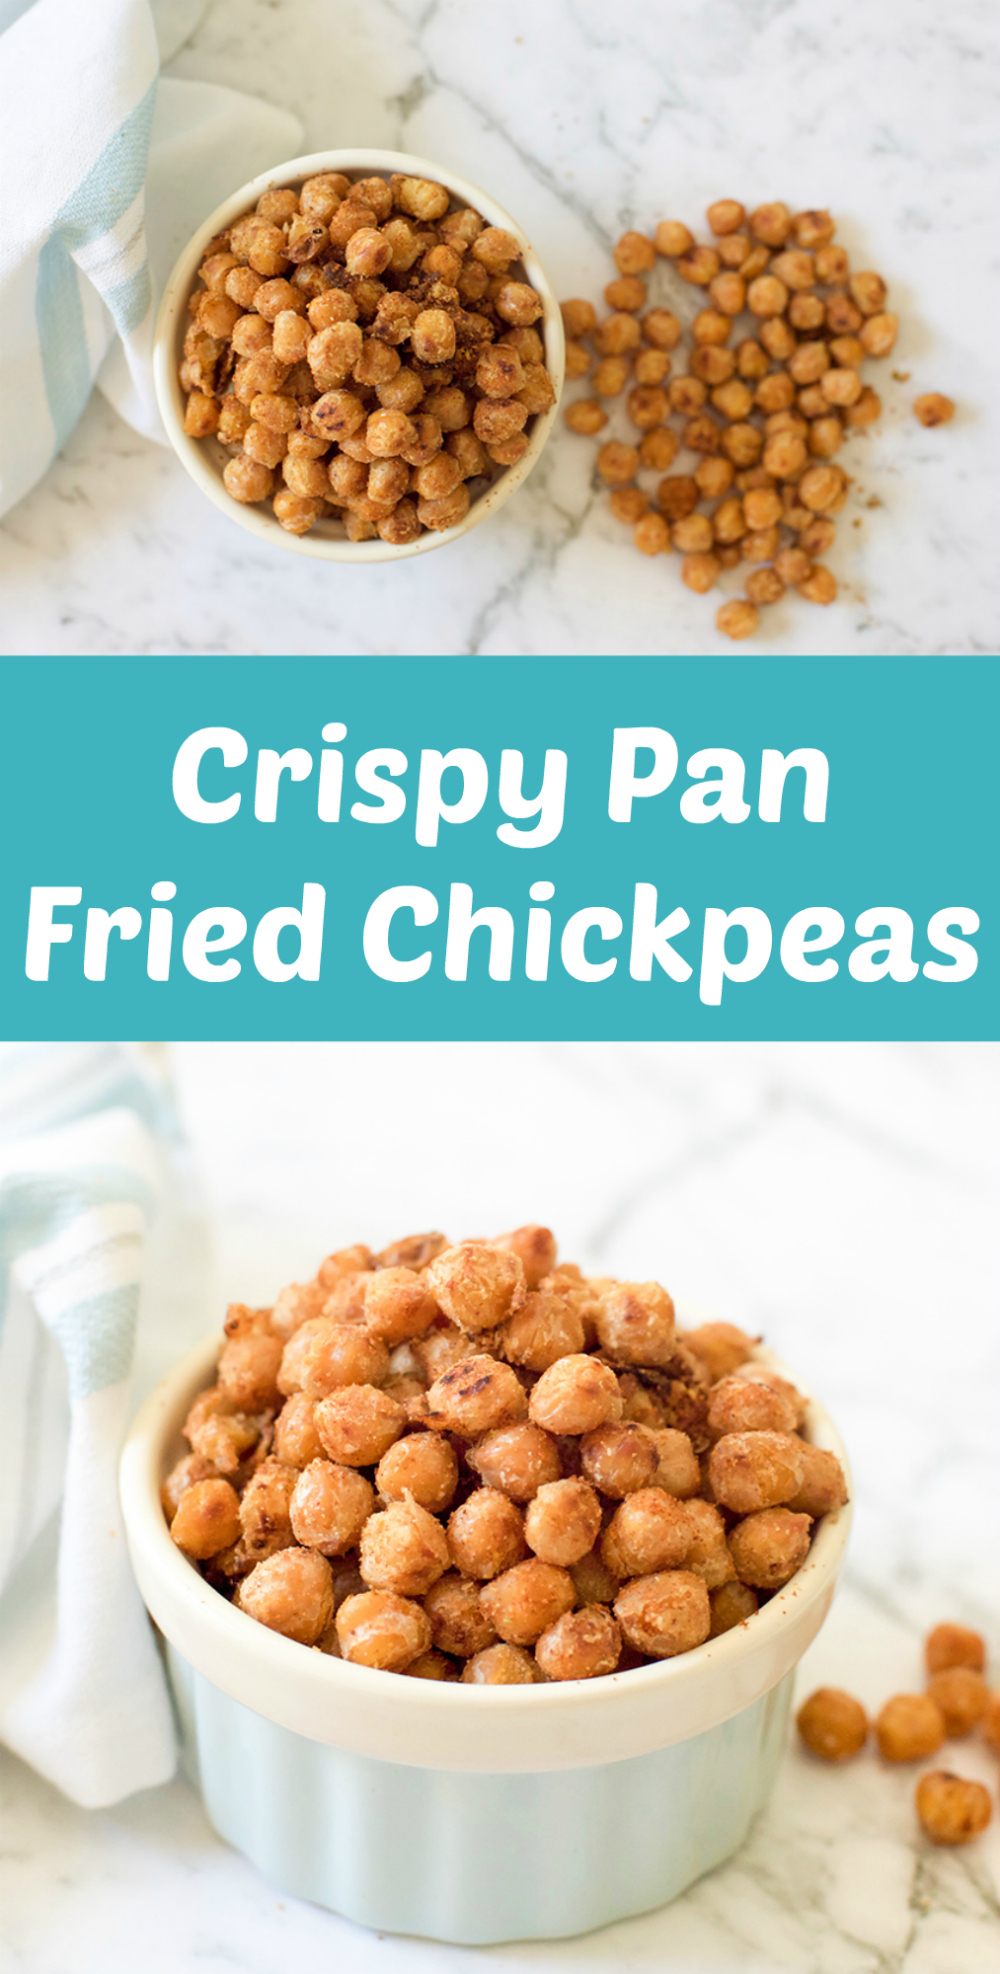 Crispy Pan Fried Chickpeas